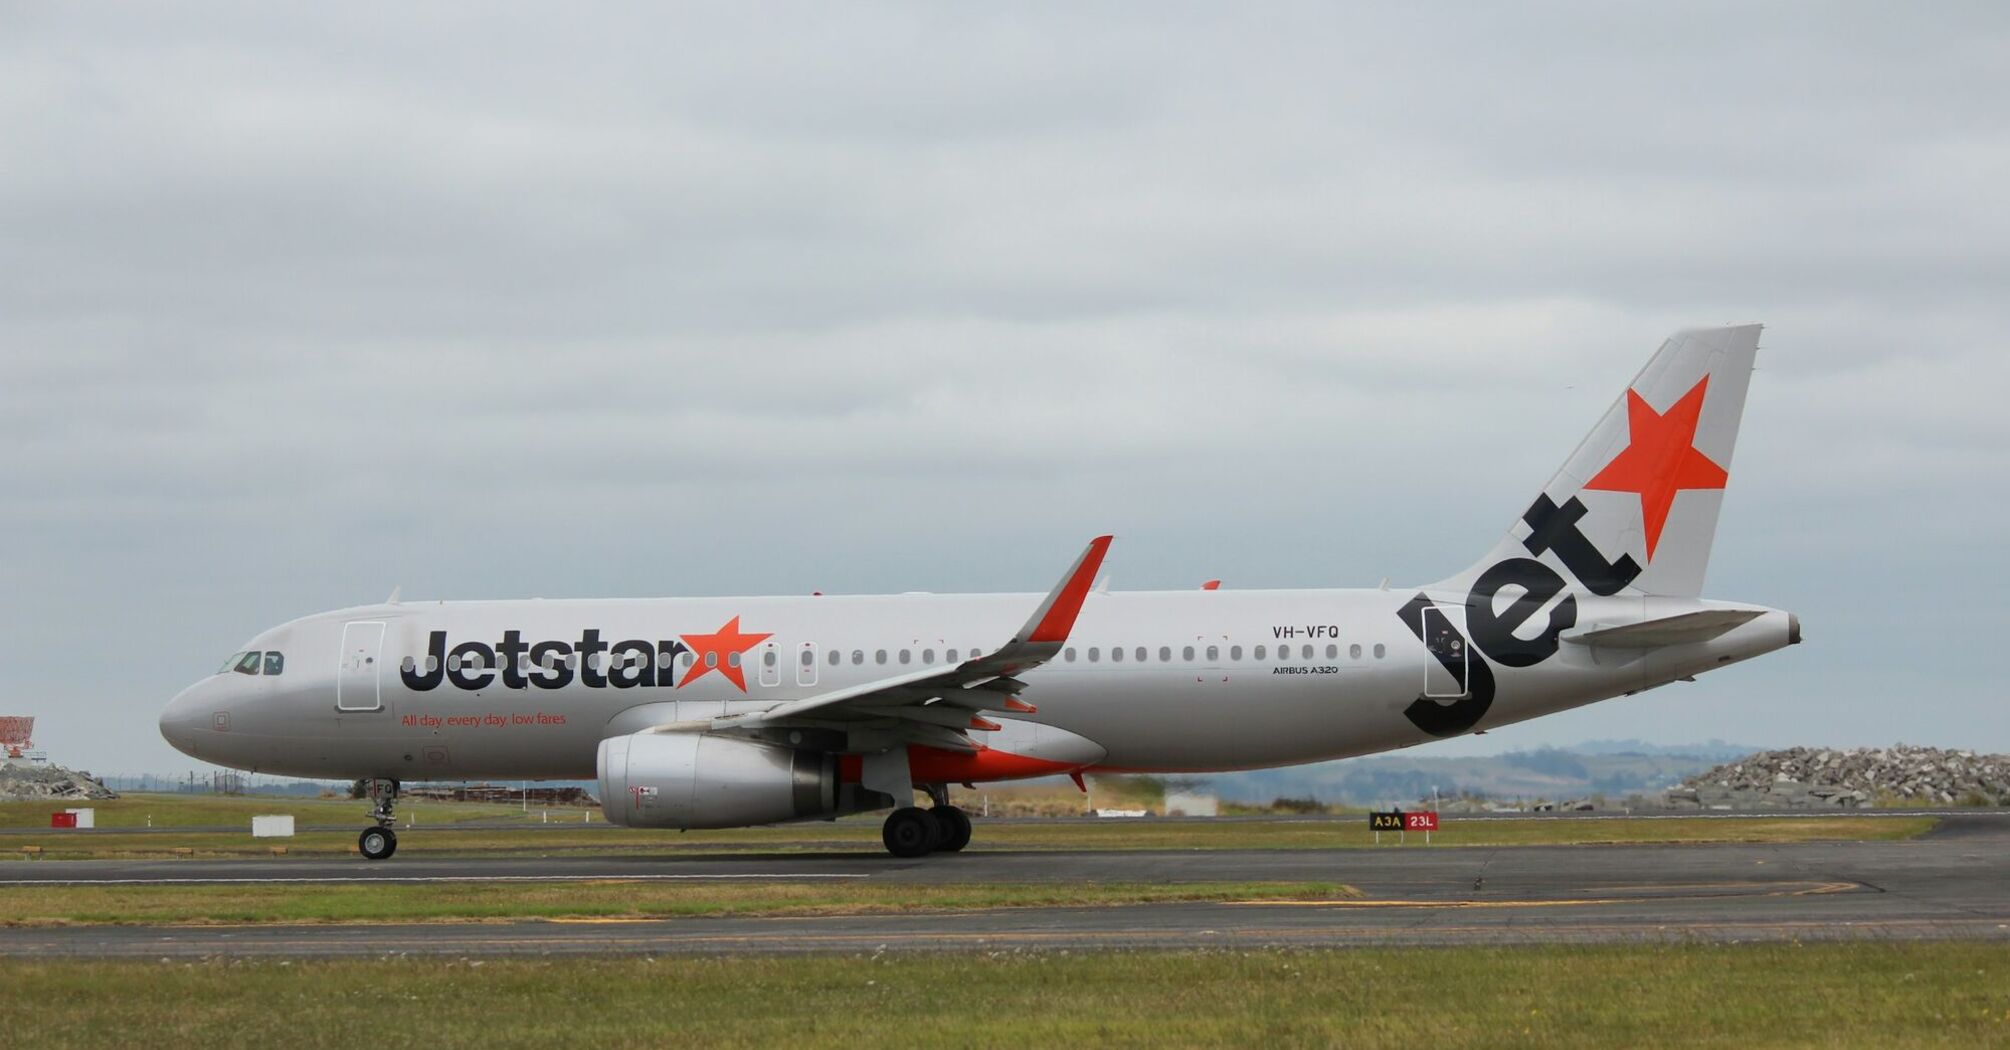 Jetstar's Airbus on landing